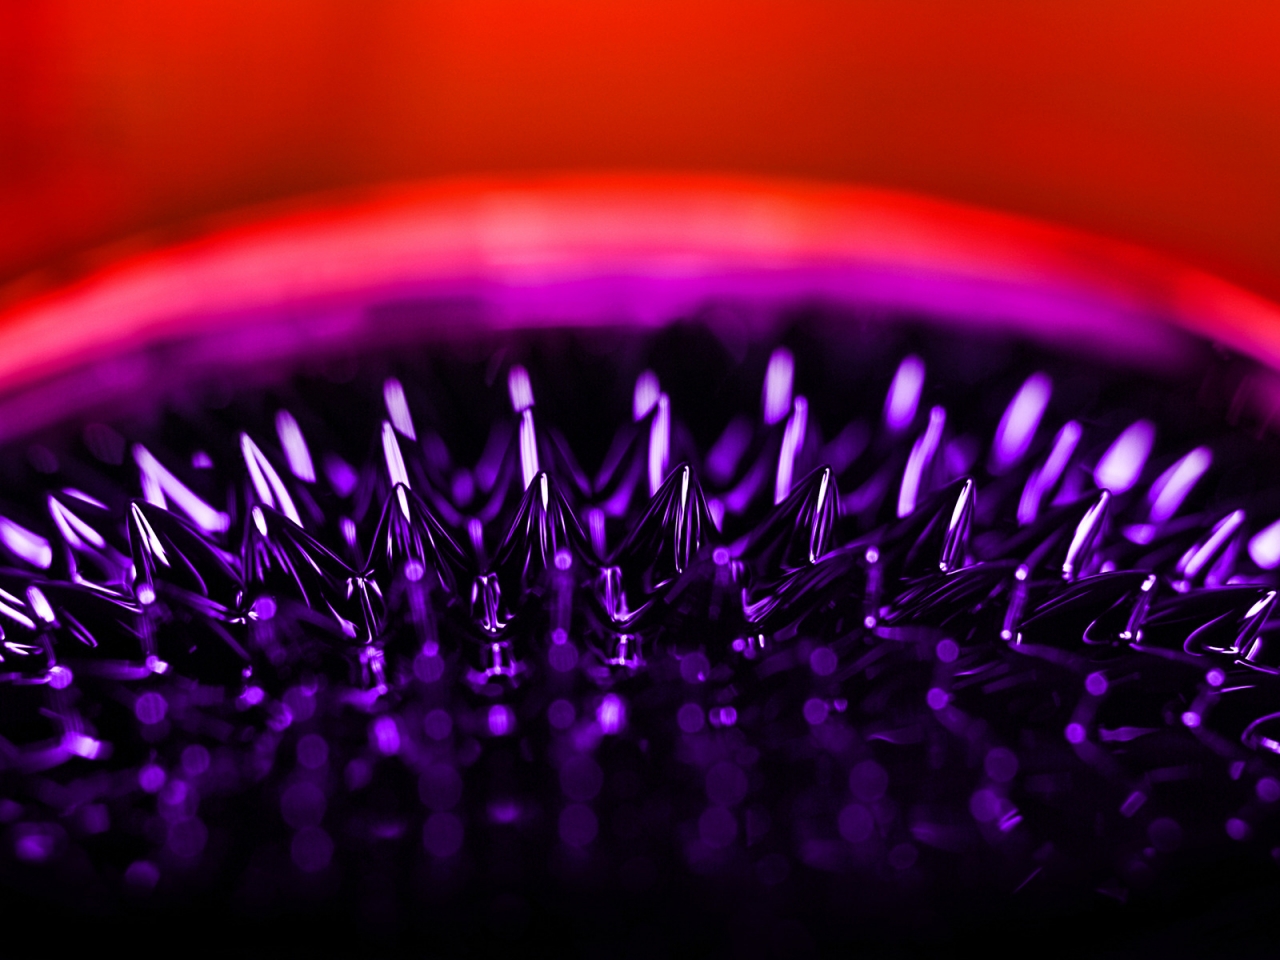 Ferrofluid for 1280 x 960 resolution